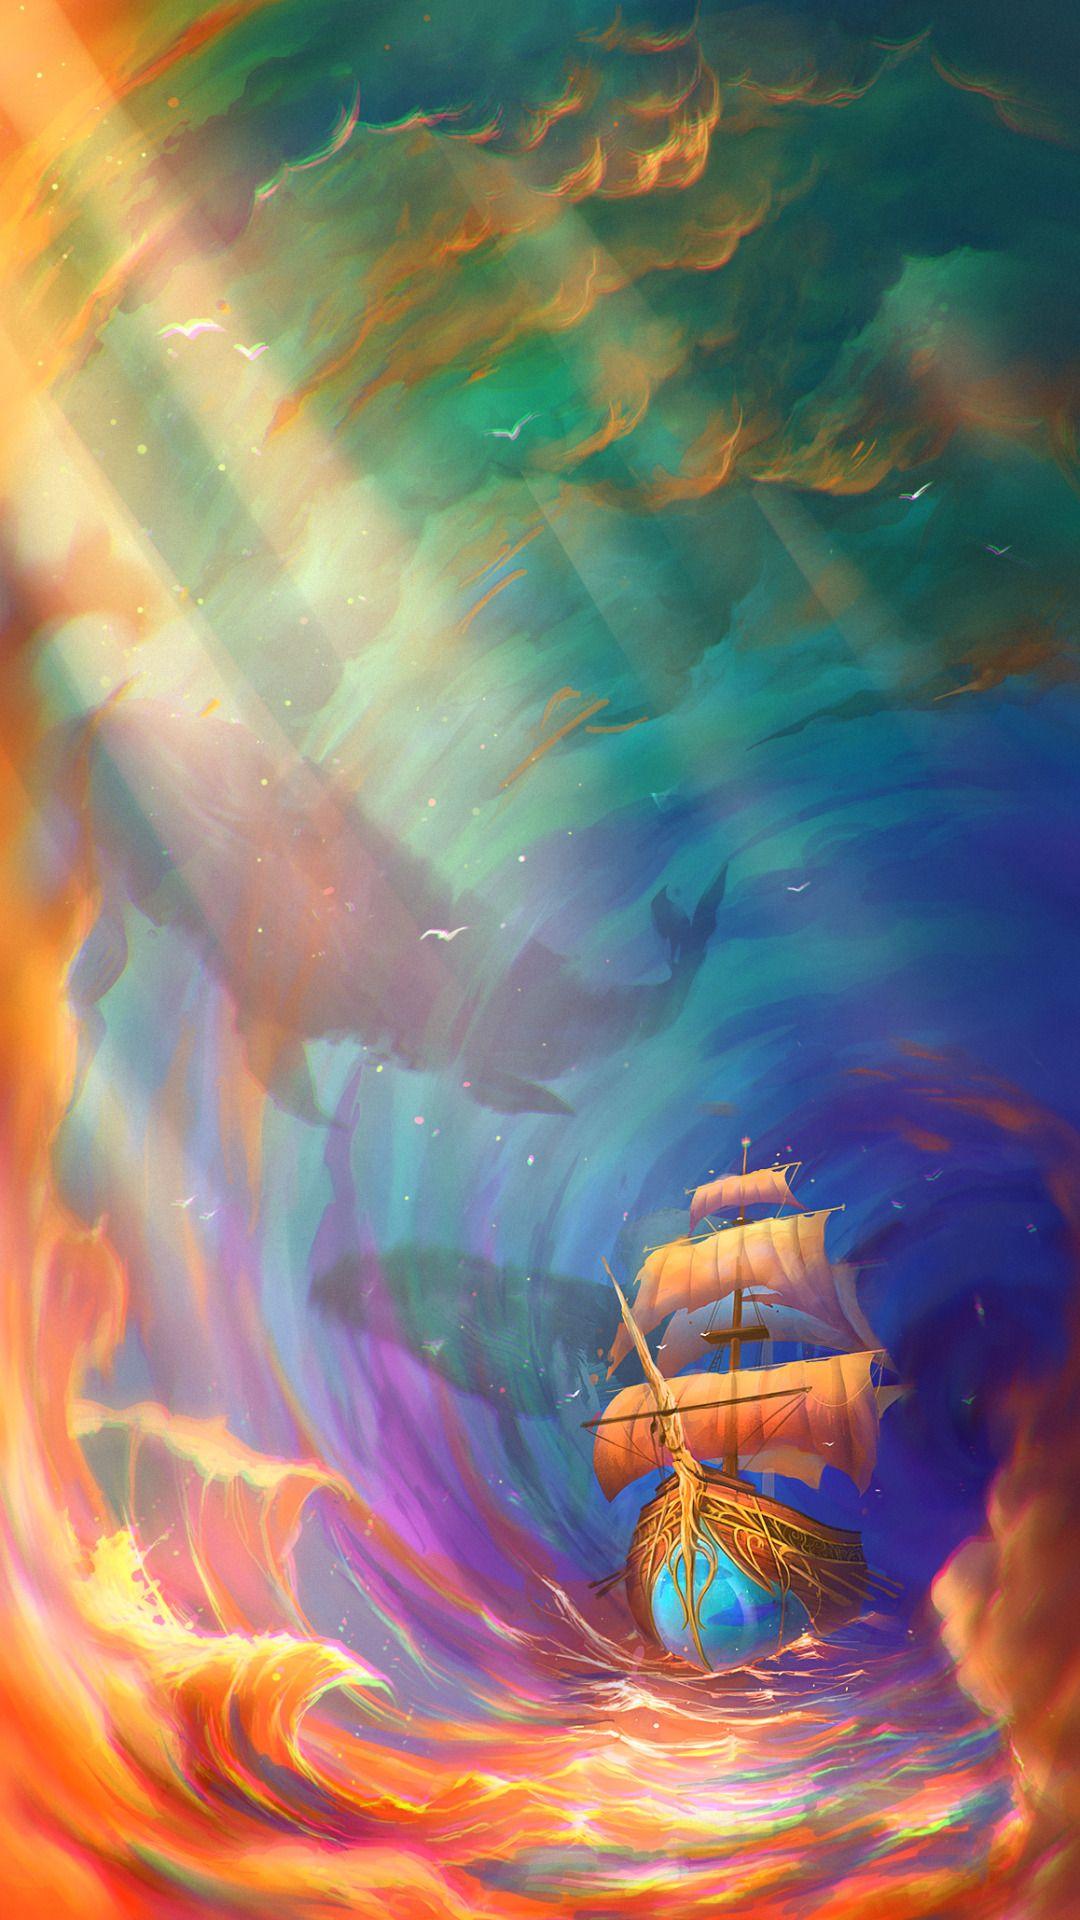 Boat in the deep sea wallpaper. Art, Painting, Illustration art